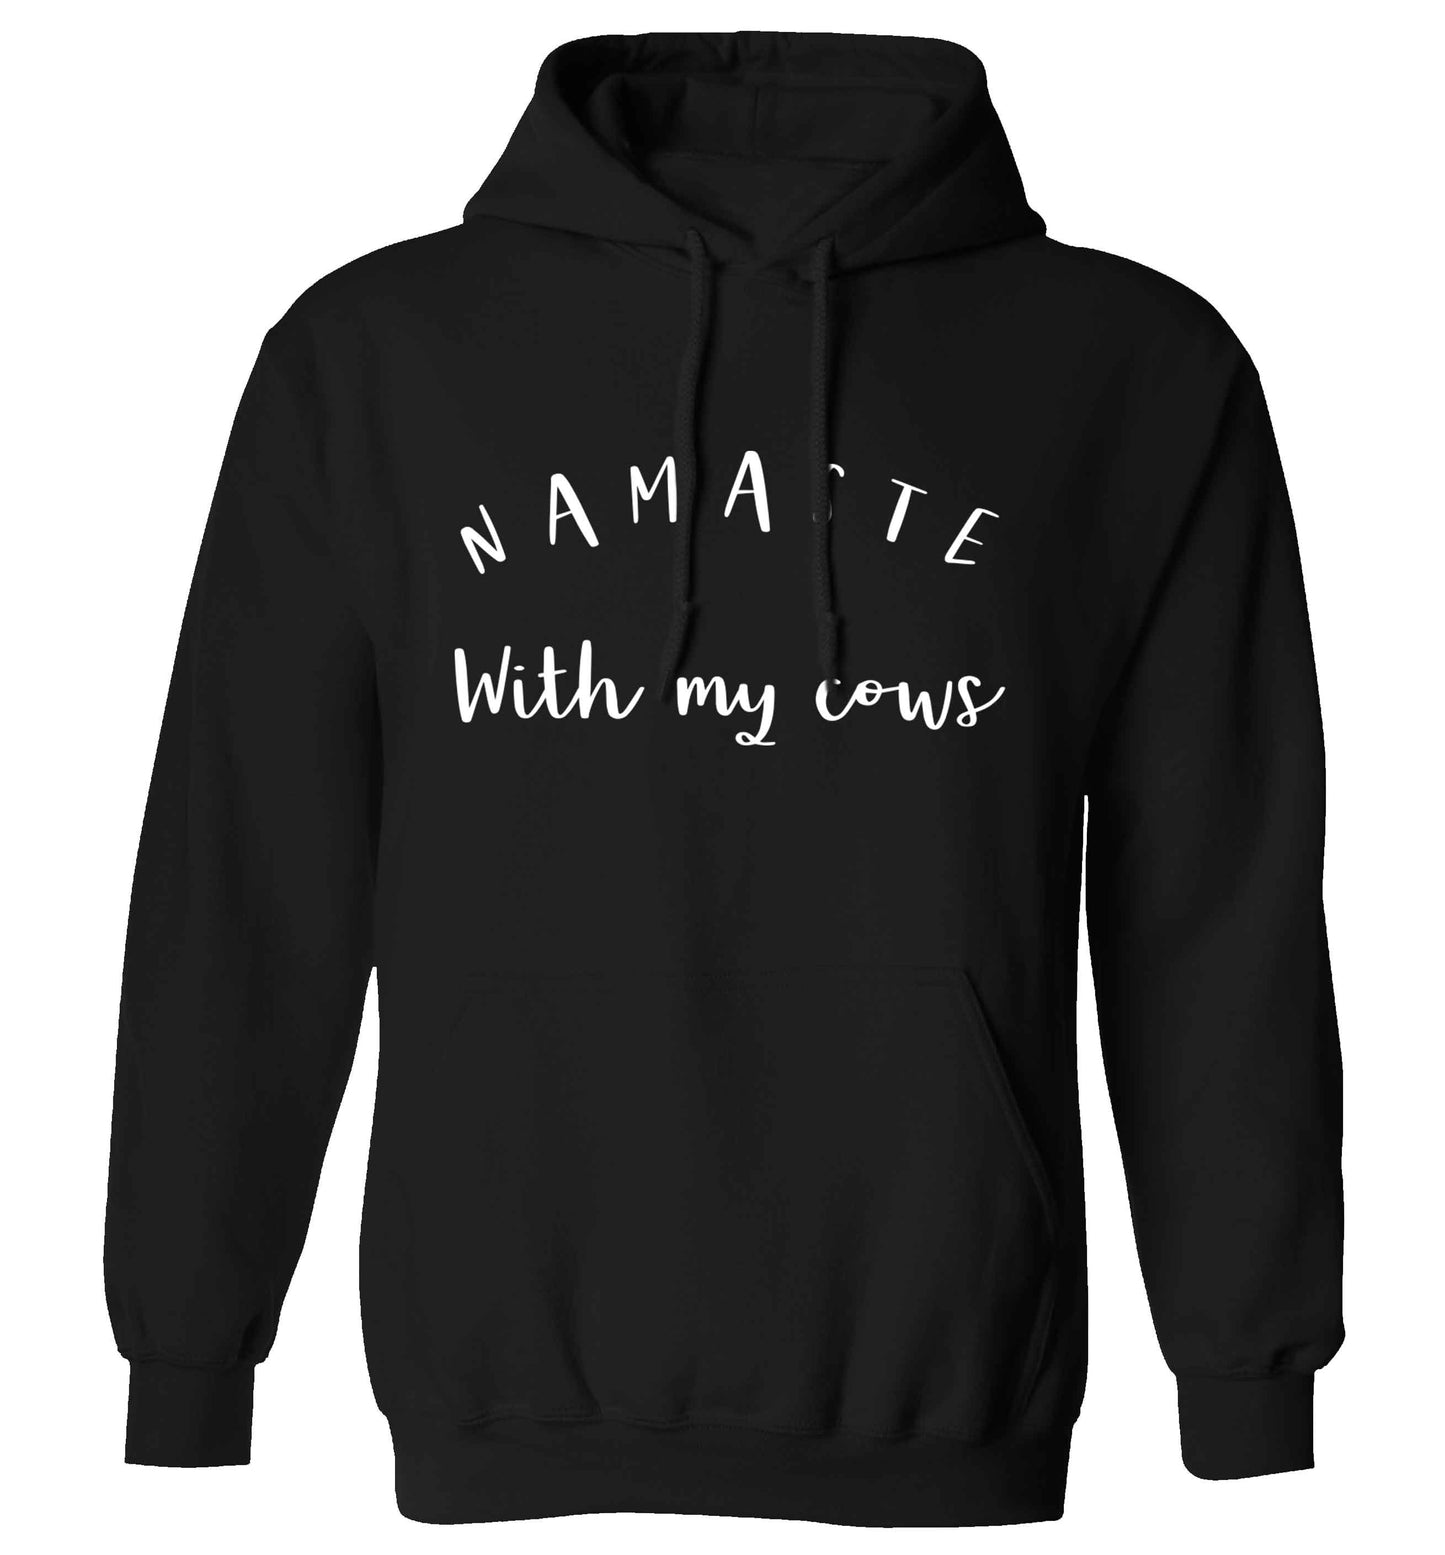 Namaste with my cows adults unisex black hoodie 2XL